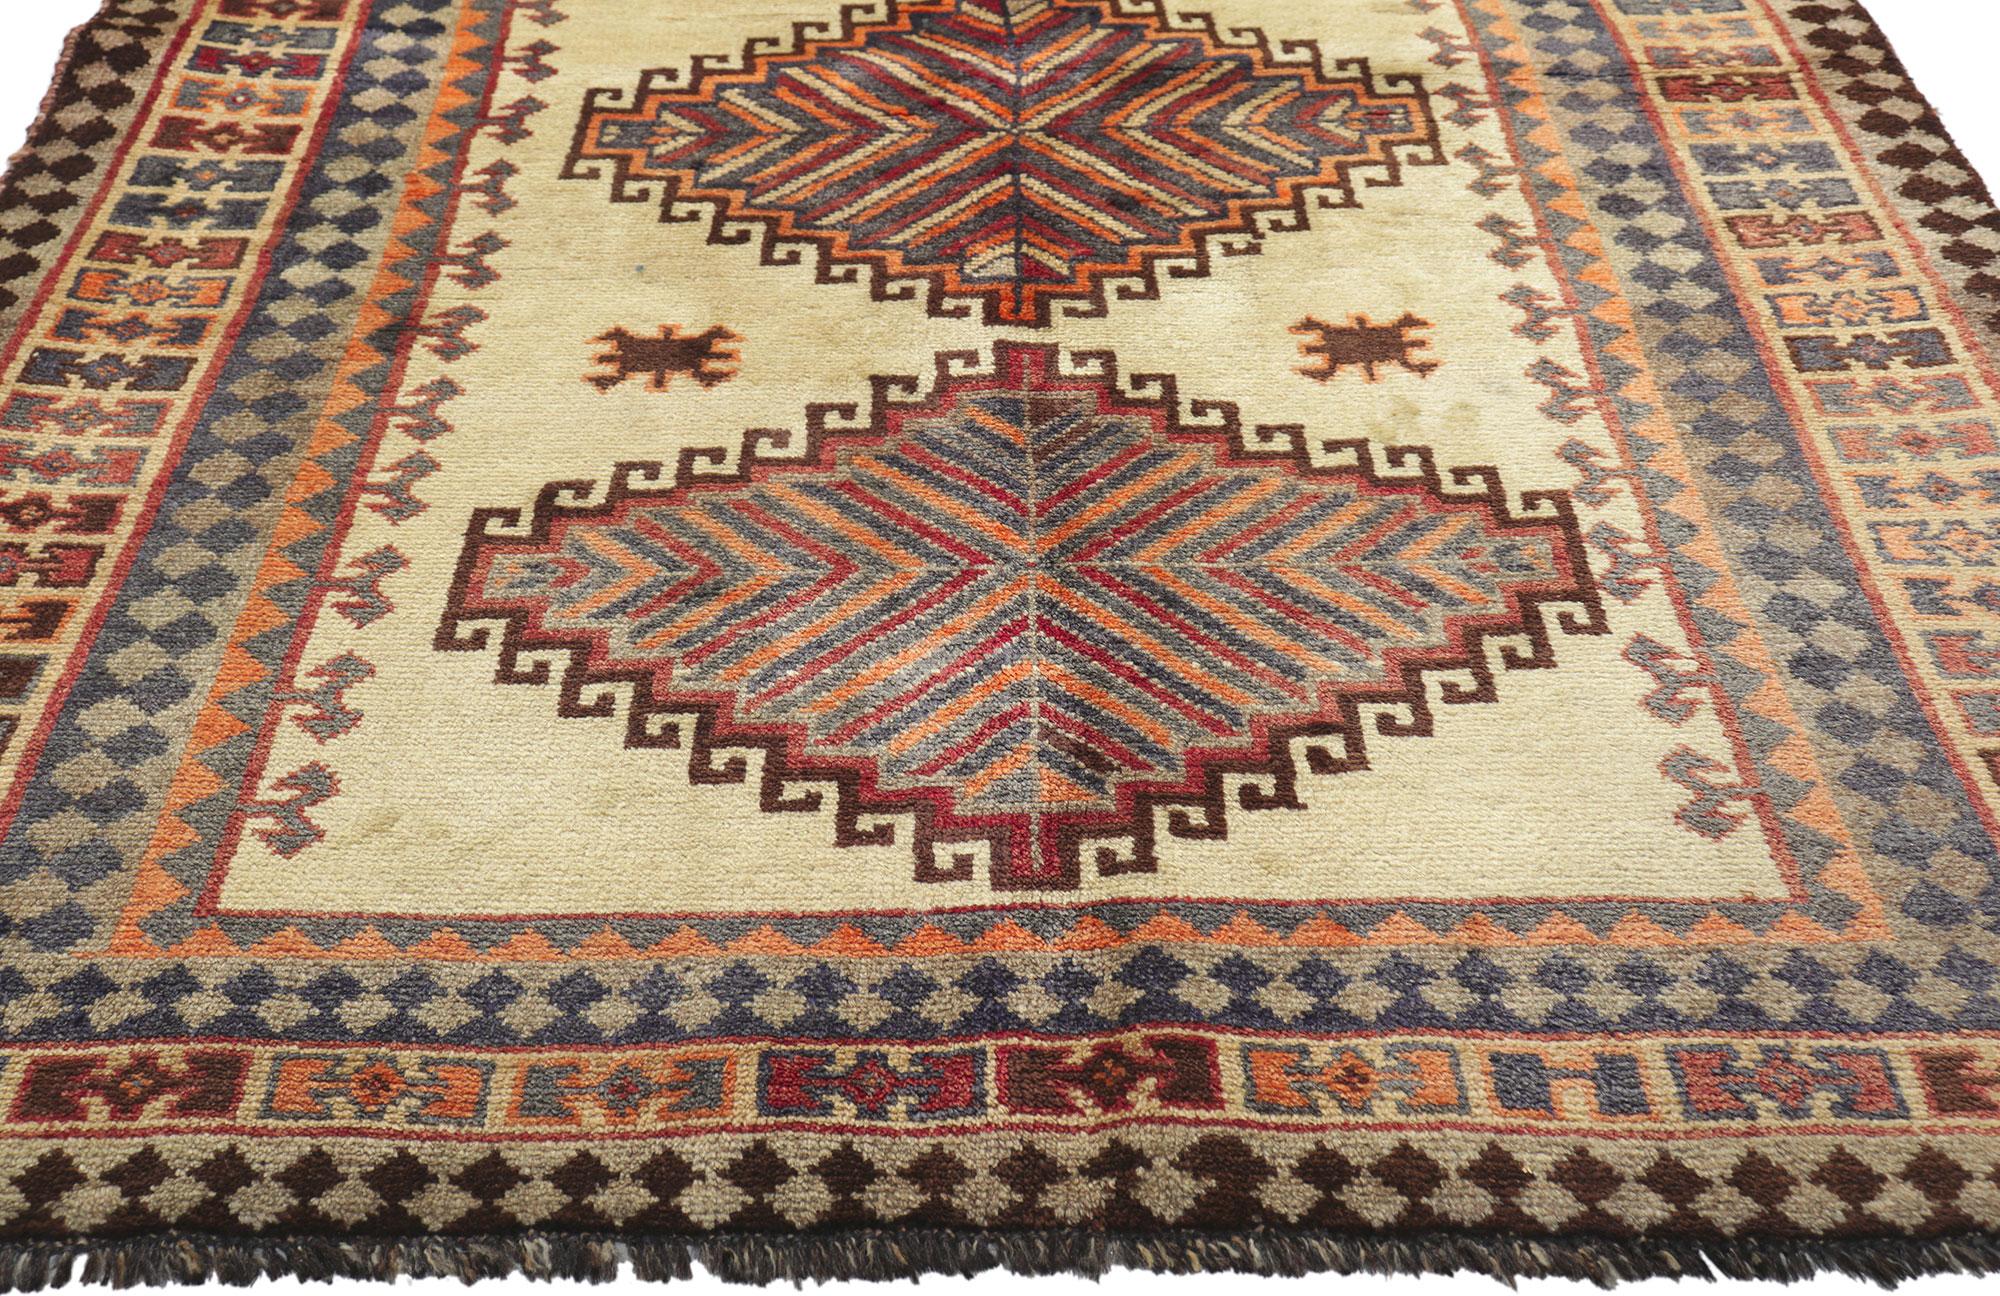 Earth-Tone Vintage Persian Shiraz Tribal Rug In Good Condition For Sale In Dallas, TX